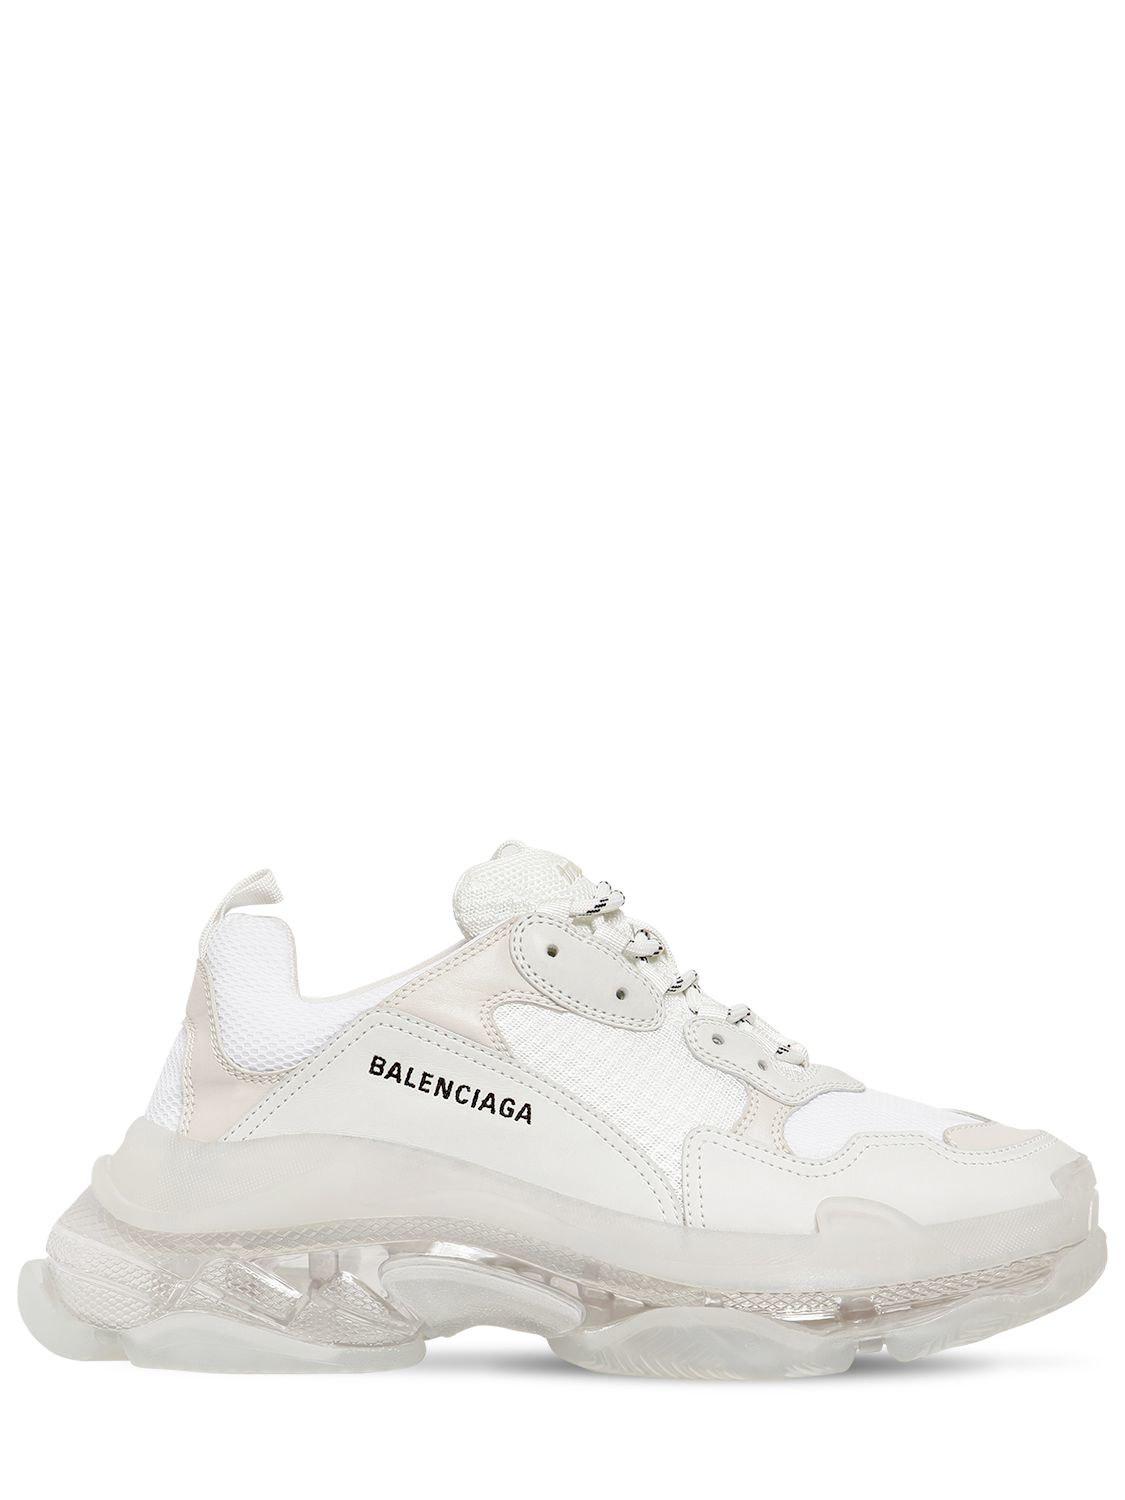 Balenciaga Triple S Bubble Sole Sneakers in White for Men - Lyst